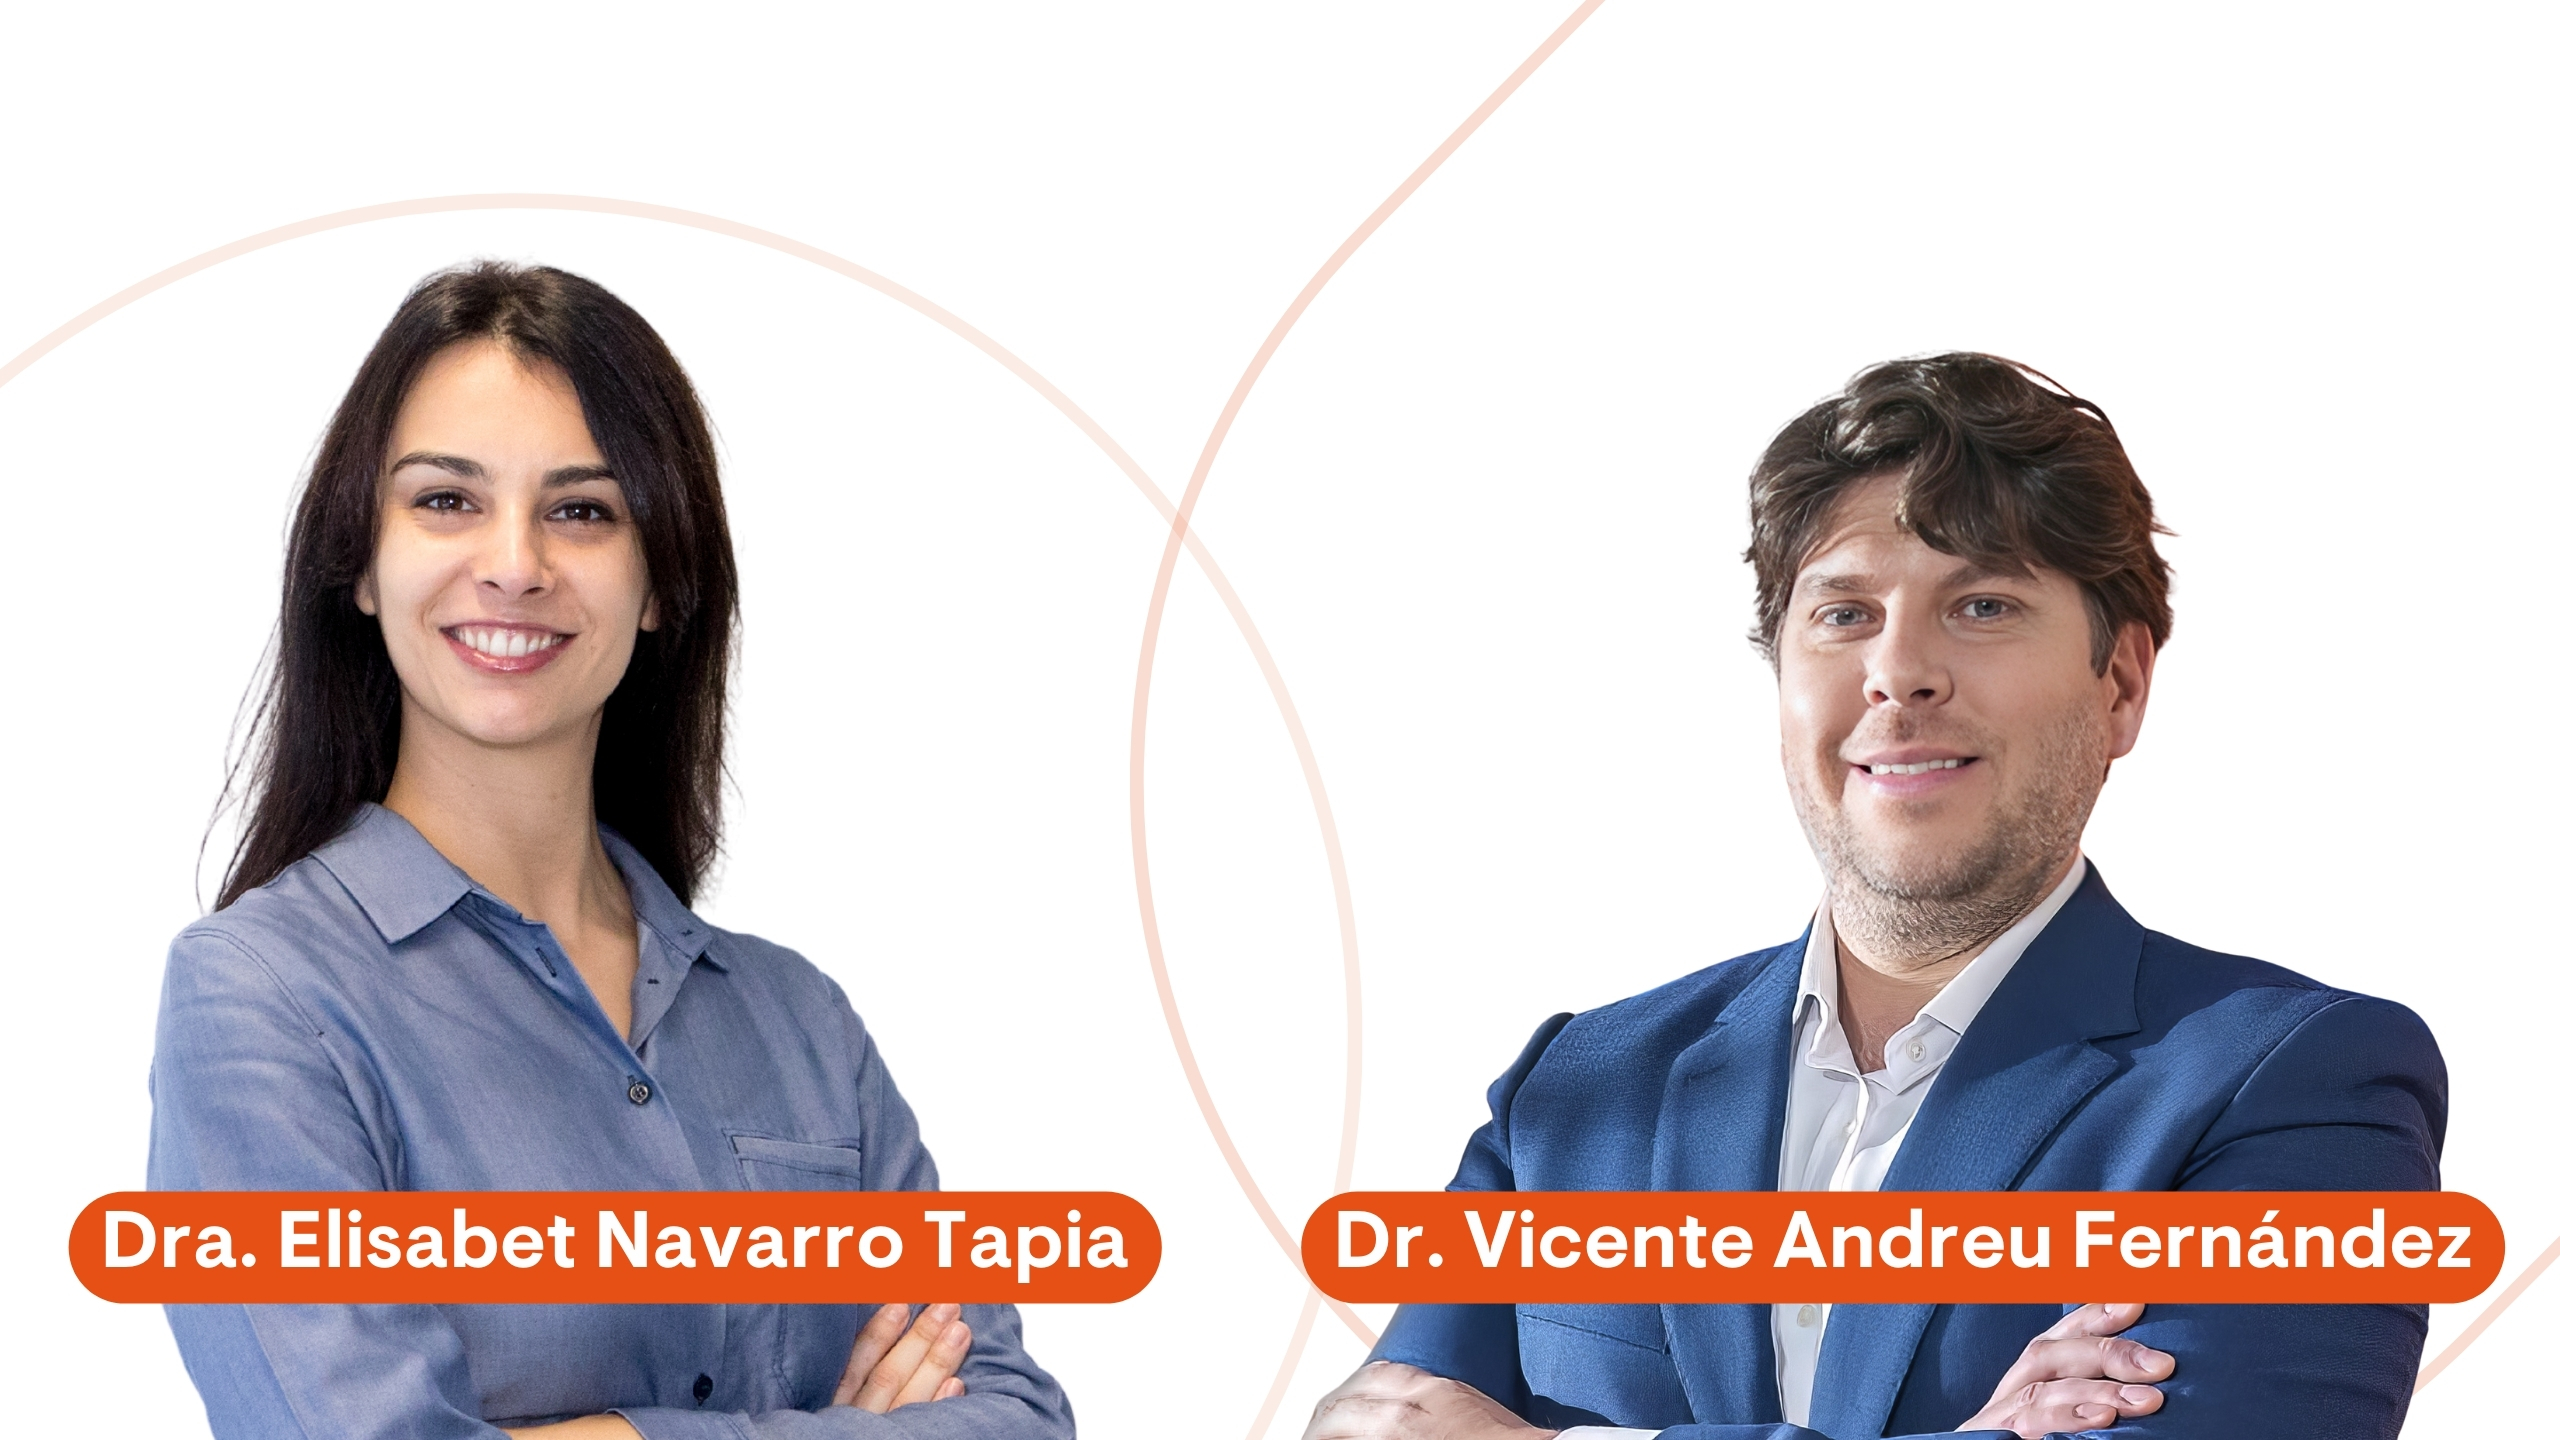 Dra. Elisabet Navarro Tapia y Dr. Vicente Andreu Fernández, investigadores VIU